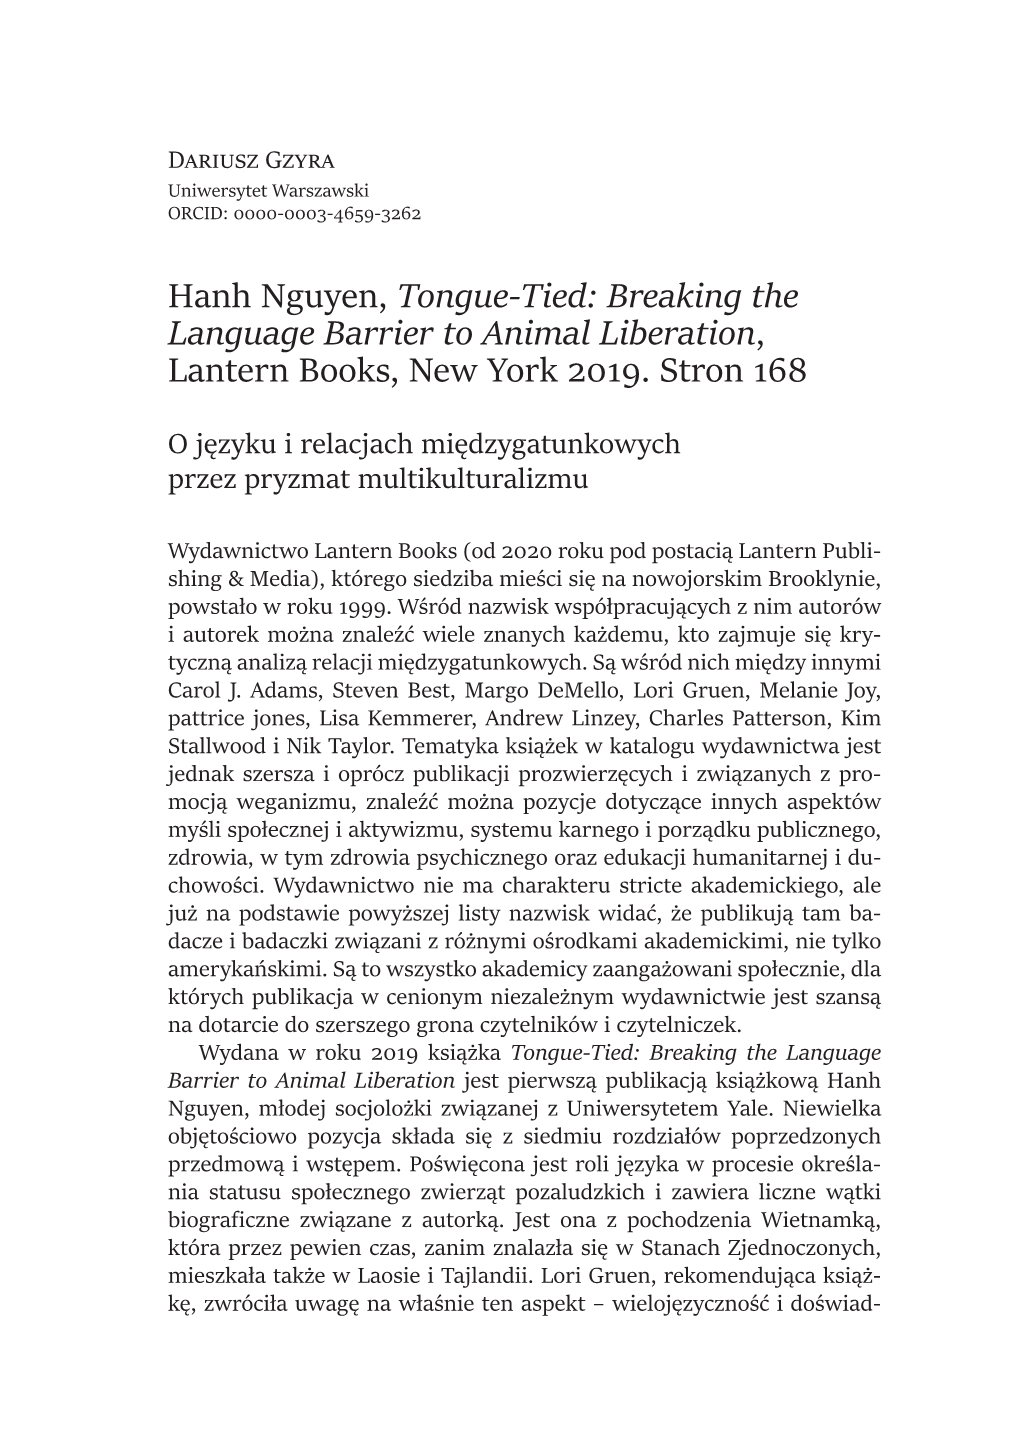 Hanh Nguyen, Tongue-Tied: Breaking the Language Barrier to Animal Liberation, Lantern Books, New York 2019